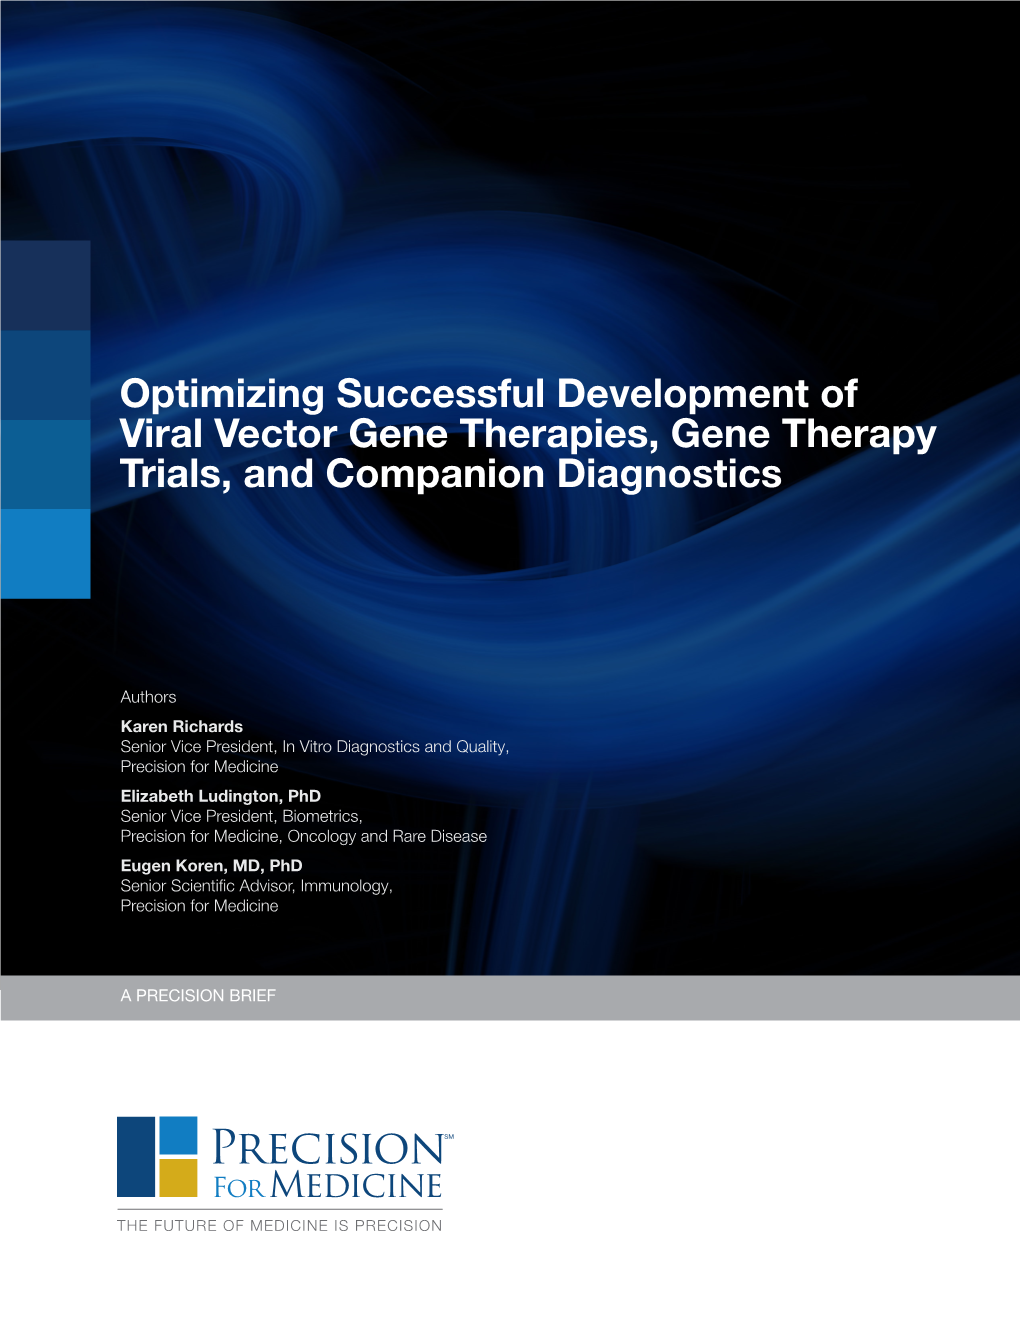 Optimizing Successful Development of Viral Vector Gene Therapies, Gene Therapy Trials, and Companion Diagnostics